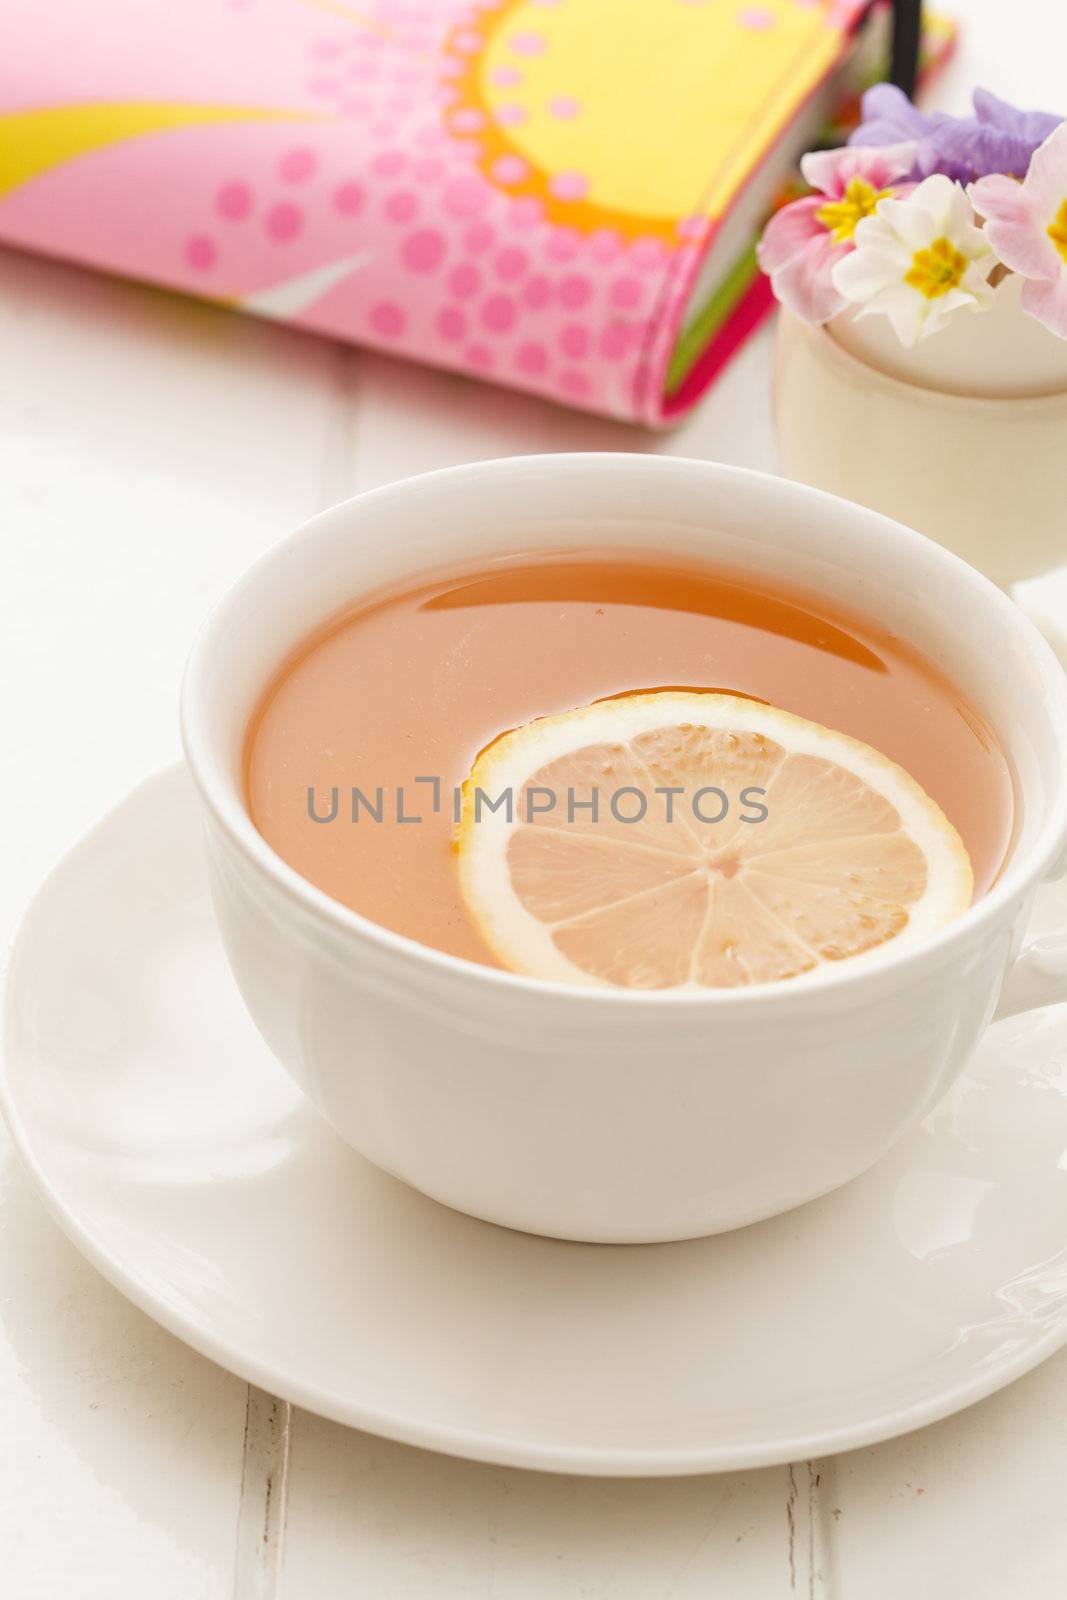 cup of tea with lemon